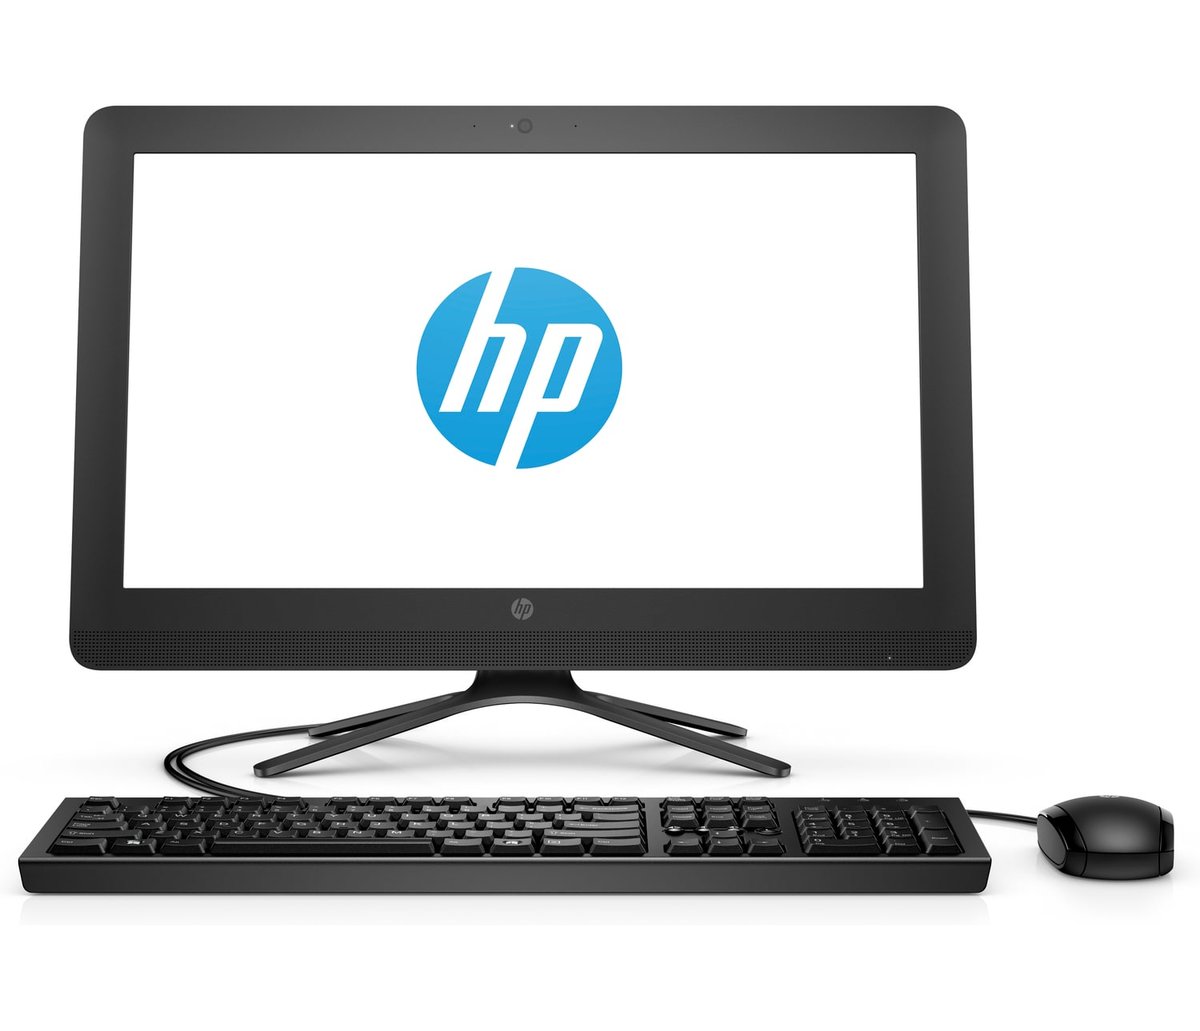 HP 22-C0001nh All-In-One 21.5-Inch Desktop, Intel Core i5-8250U 1.6GHz  Processor, 8GB RAM, 1TB HDD, Intel UHD Graphics, Windows 10 Home - Foretec  Marketplace